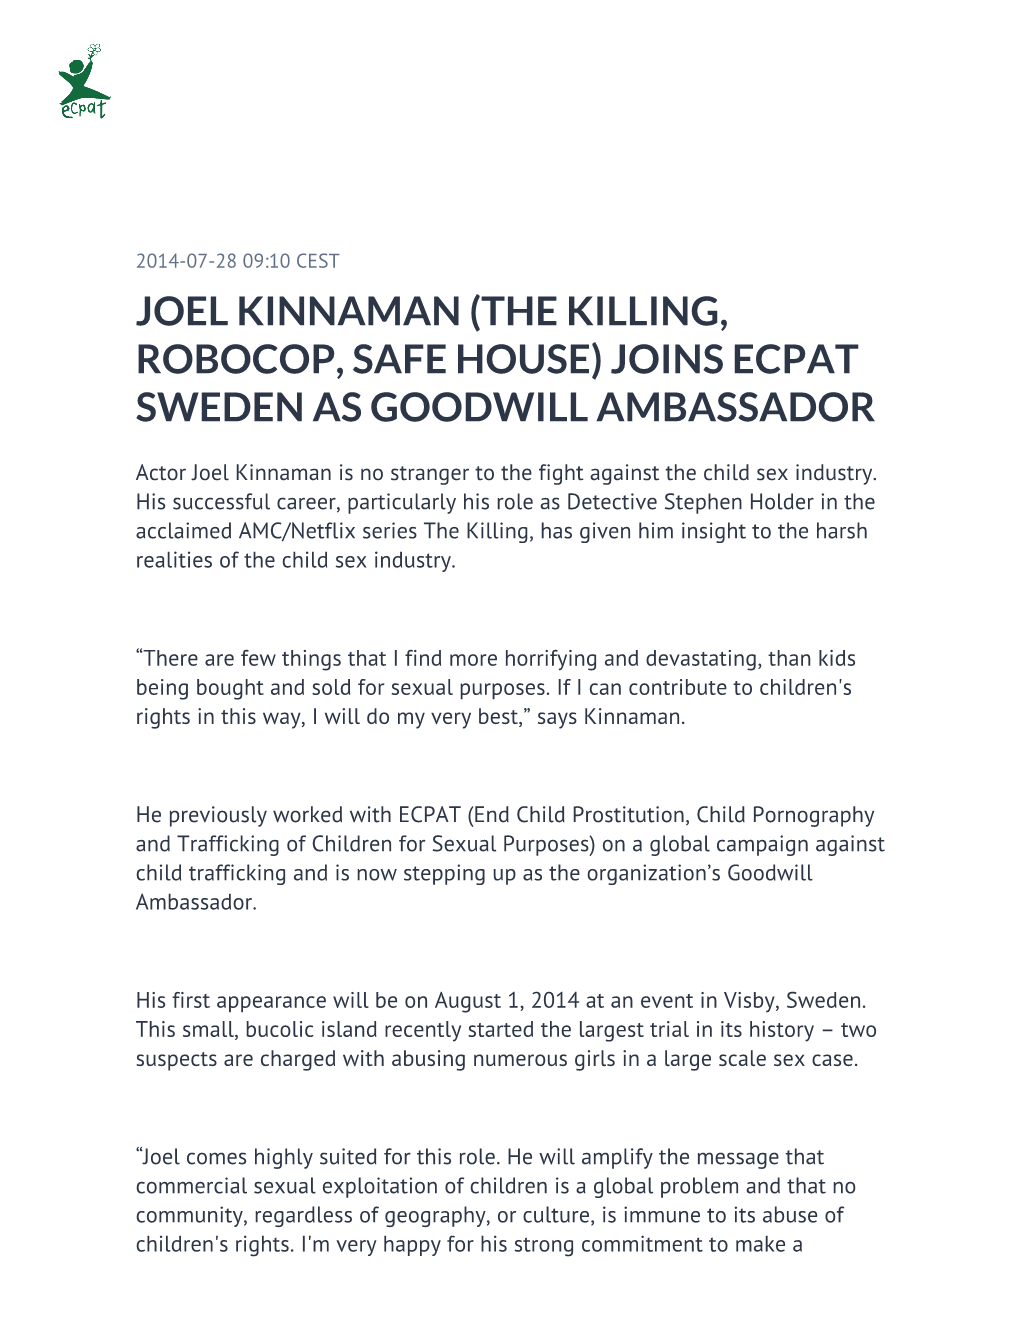 Joel Kinnaman (The Killing, Robocop, Safe House) Joins Ecpat Sweden As Goodwill Ambassador